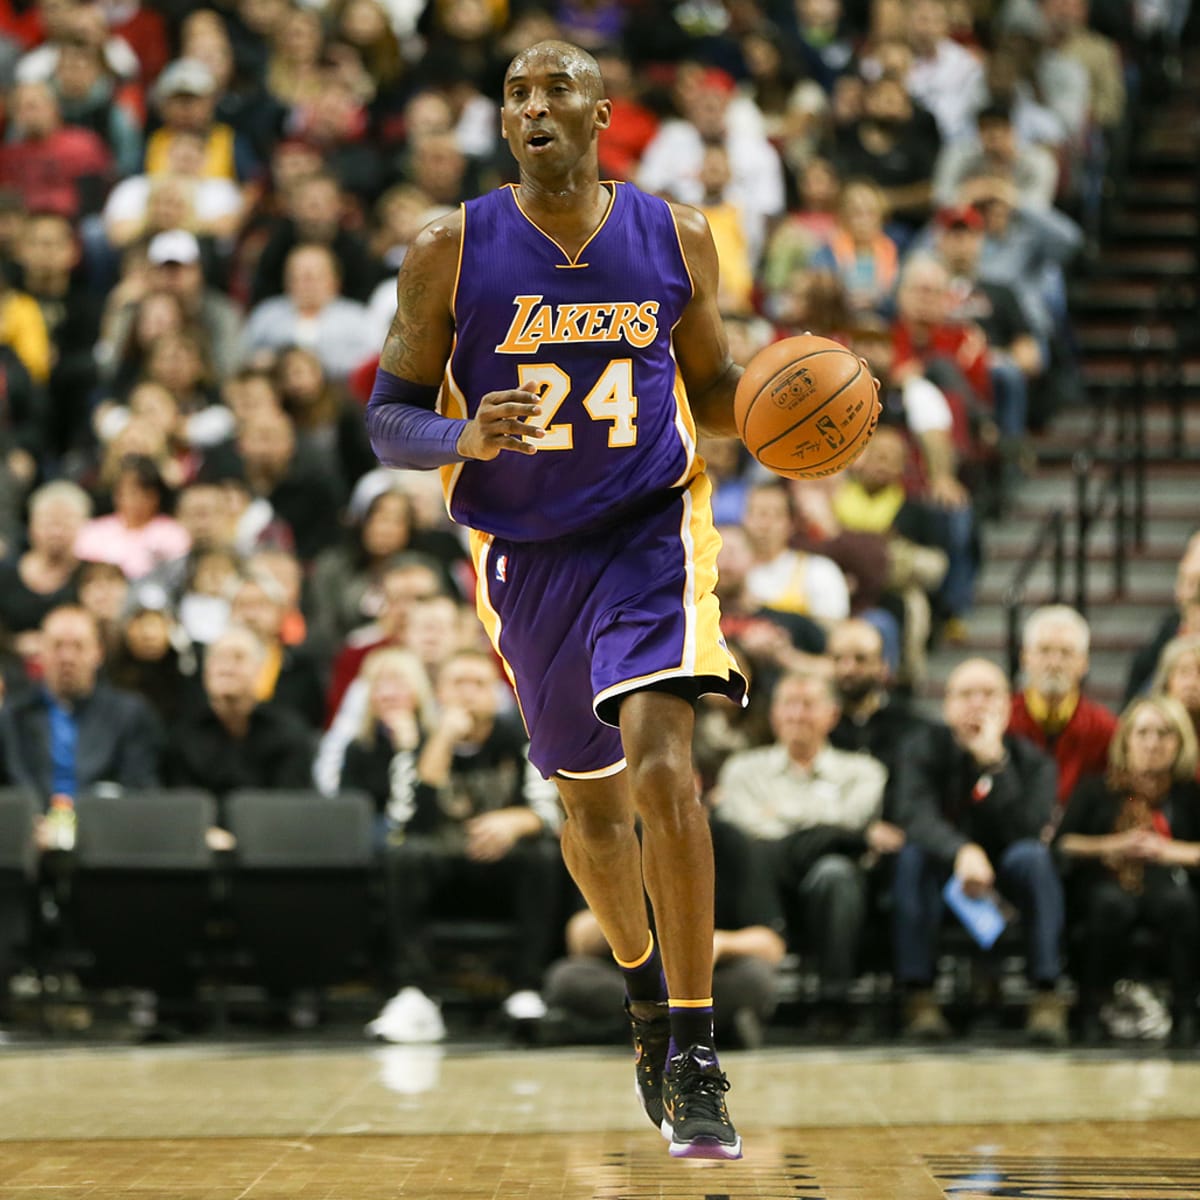 Nike Basketball celebrates Kobe Bryant's numbers retirement